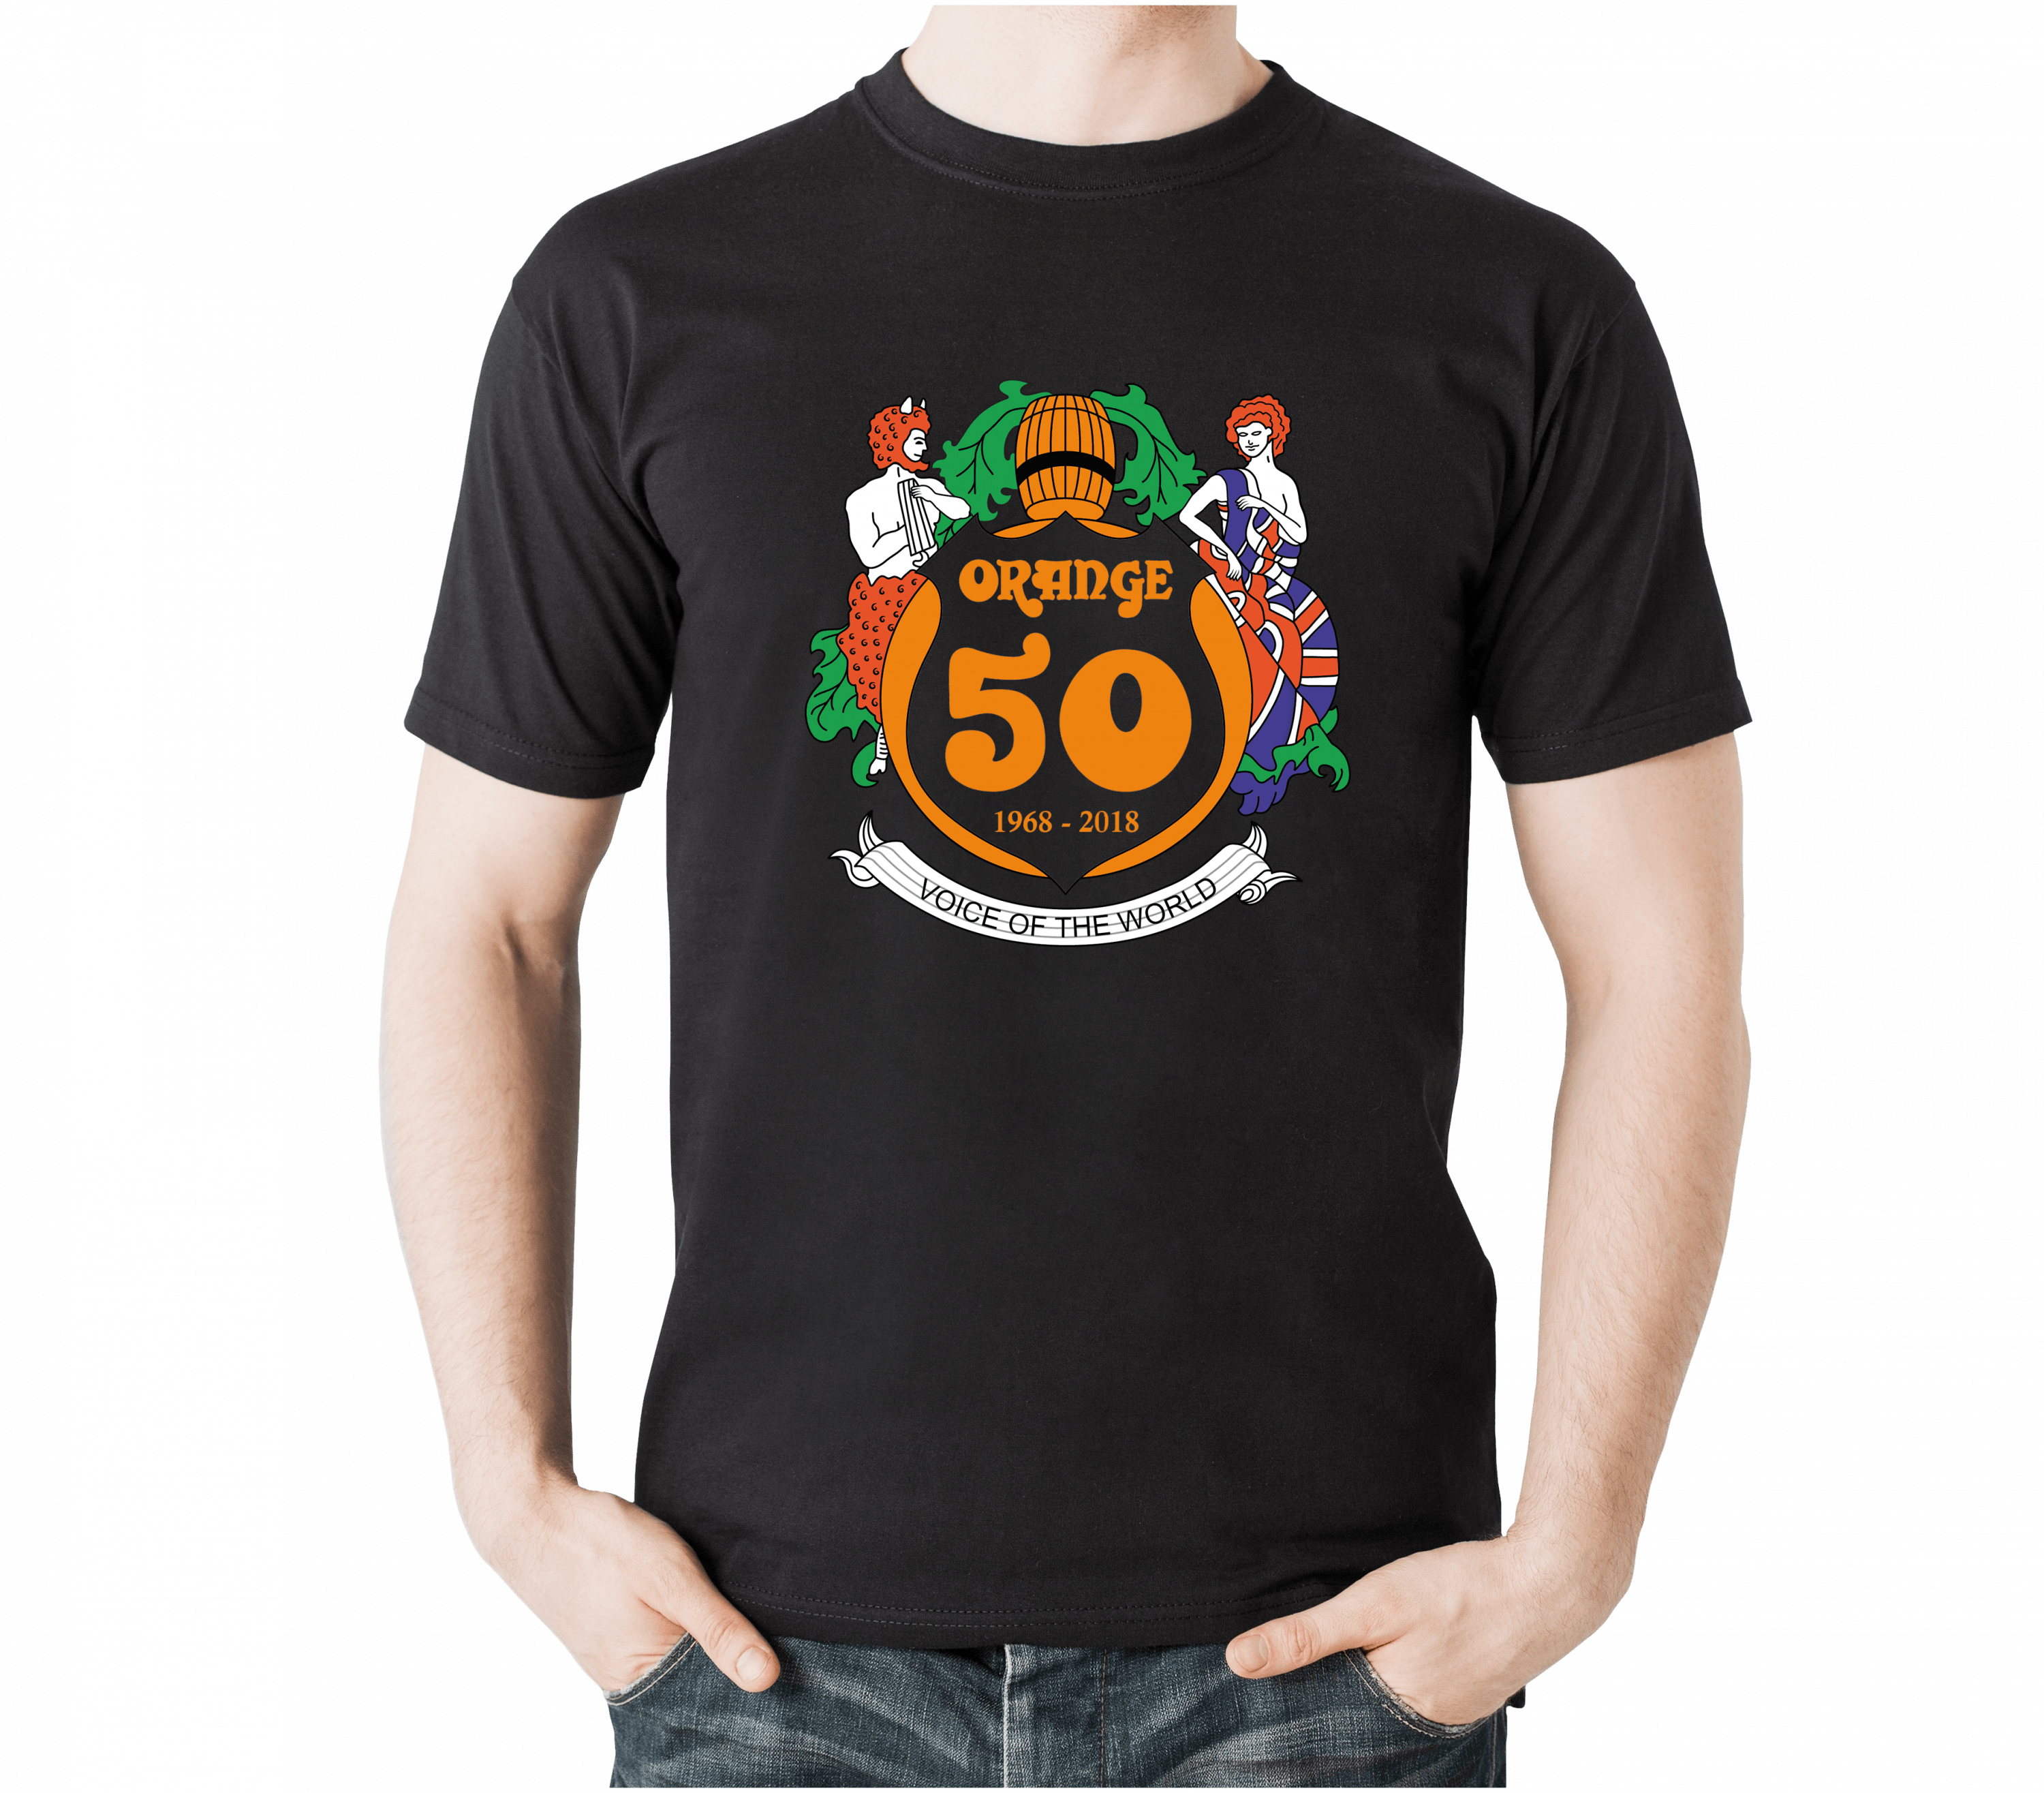 Download Orange 50th Anniversary Tee - USA Store